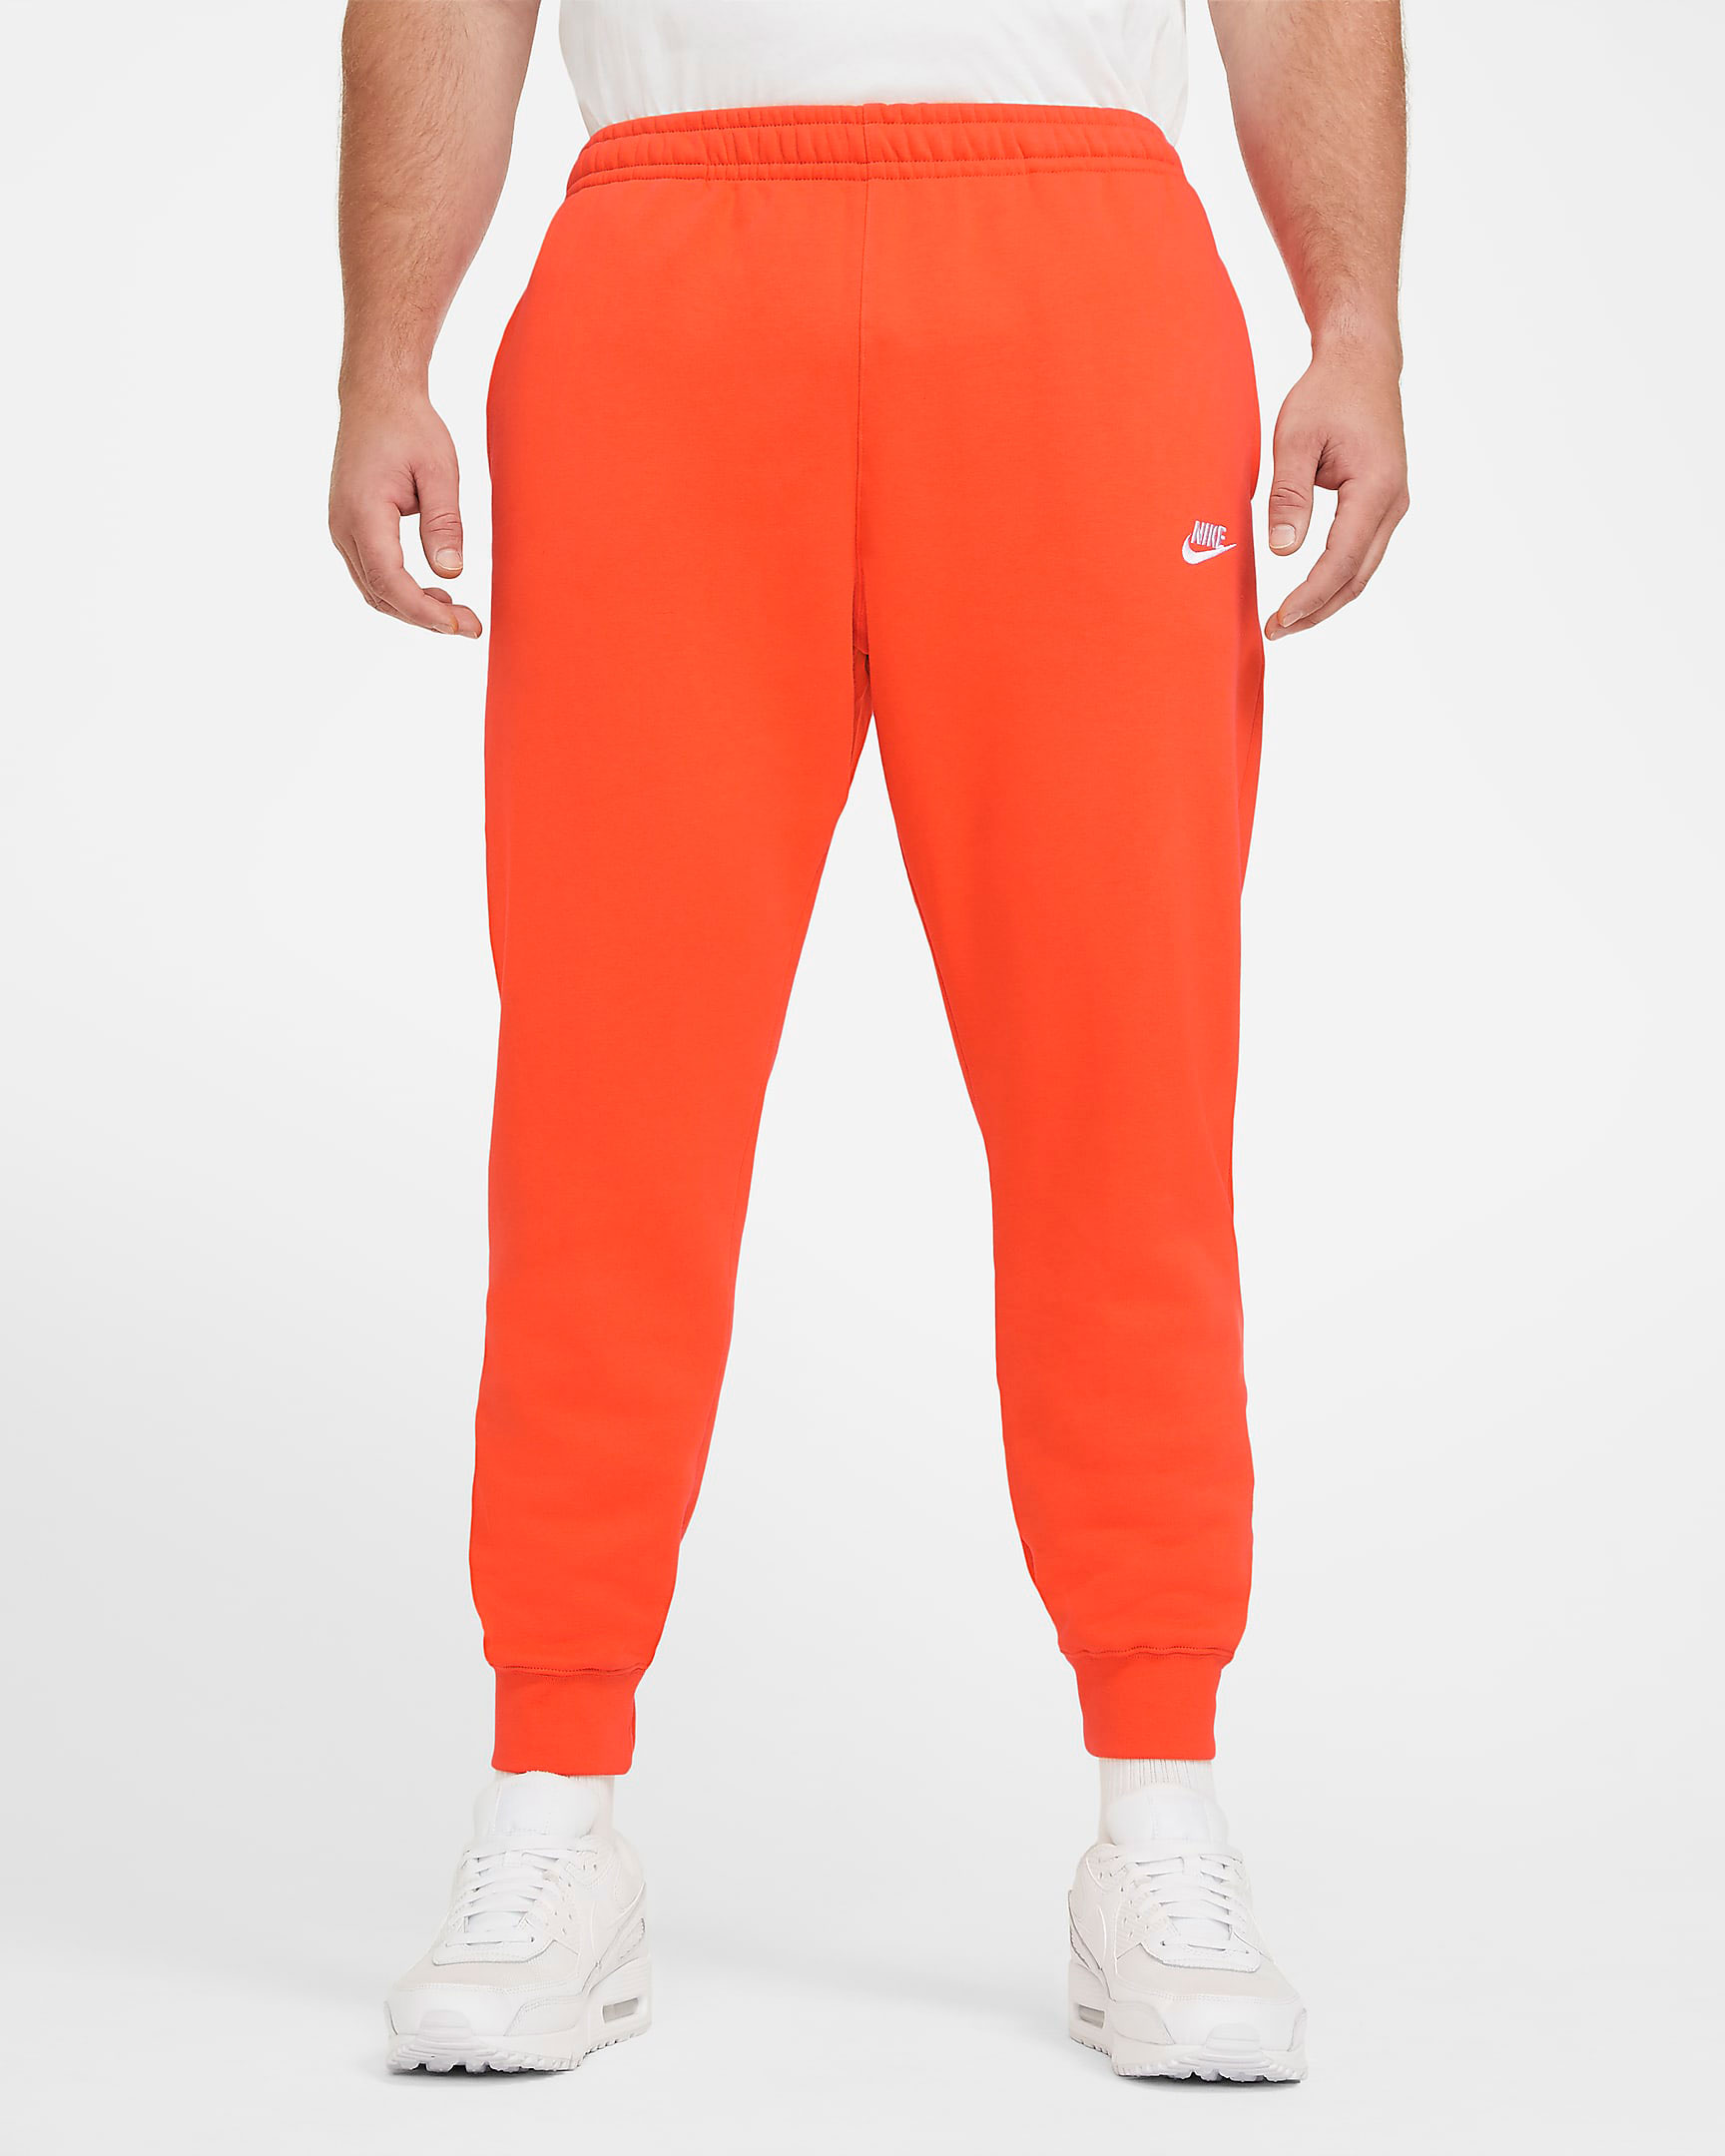 nike-air-foamposite-pro-halloween-orange-jogger-pants